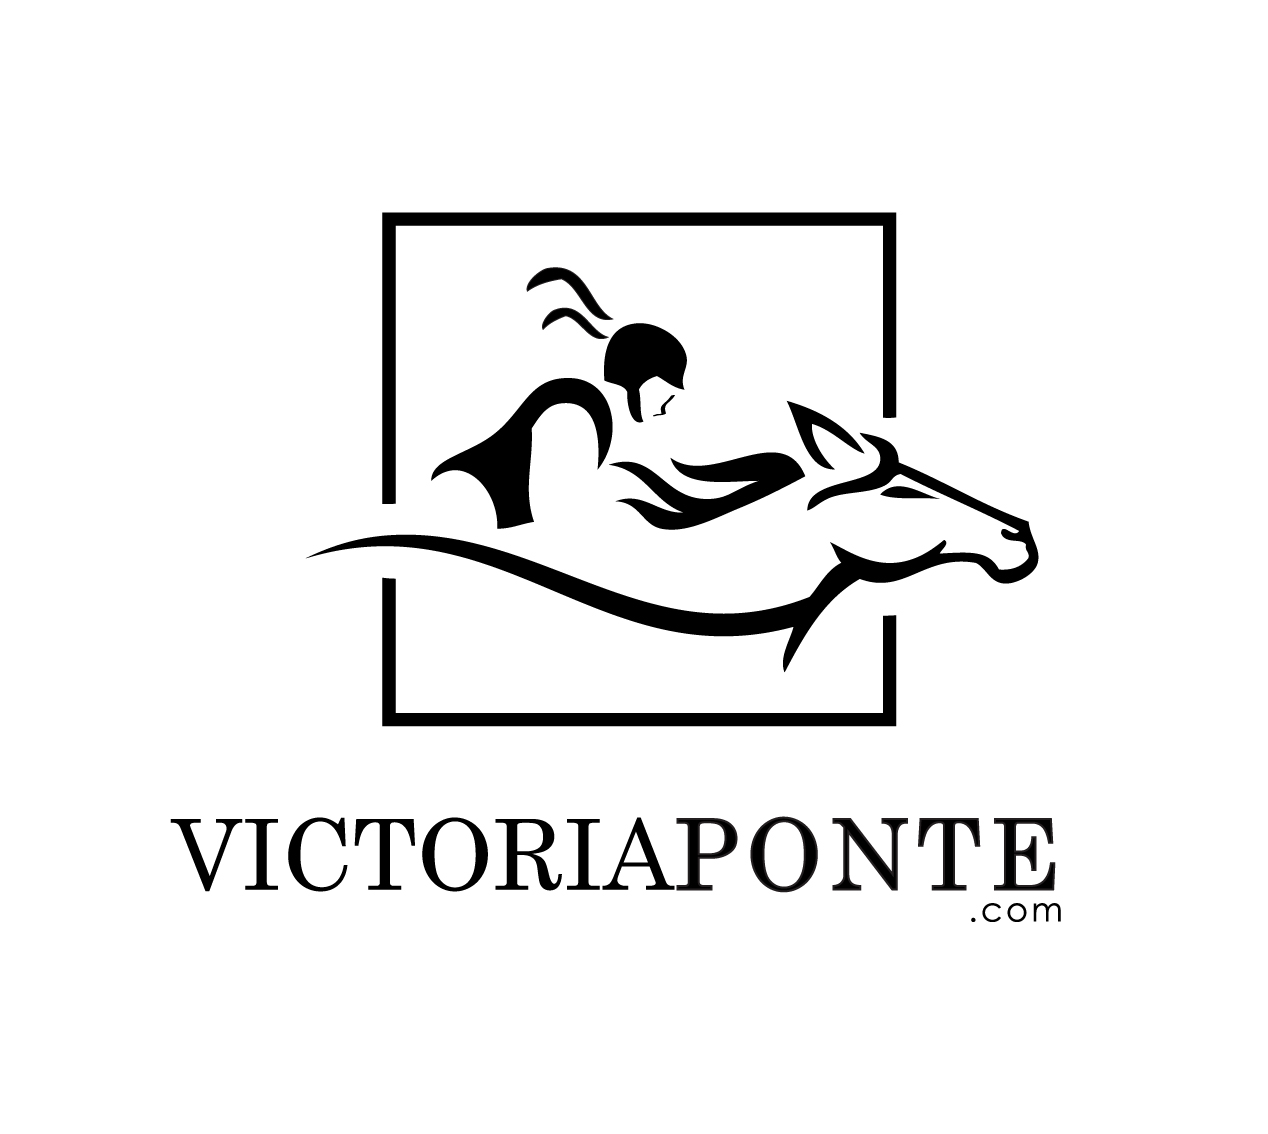 www.Victoriaponte.com